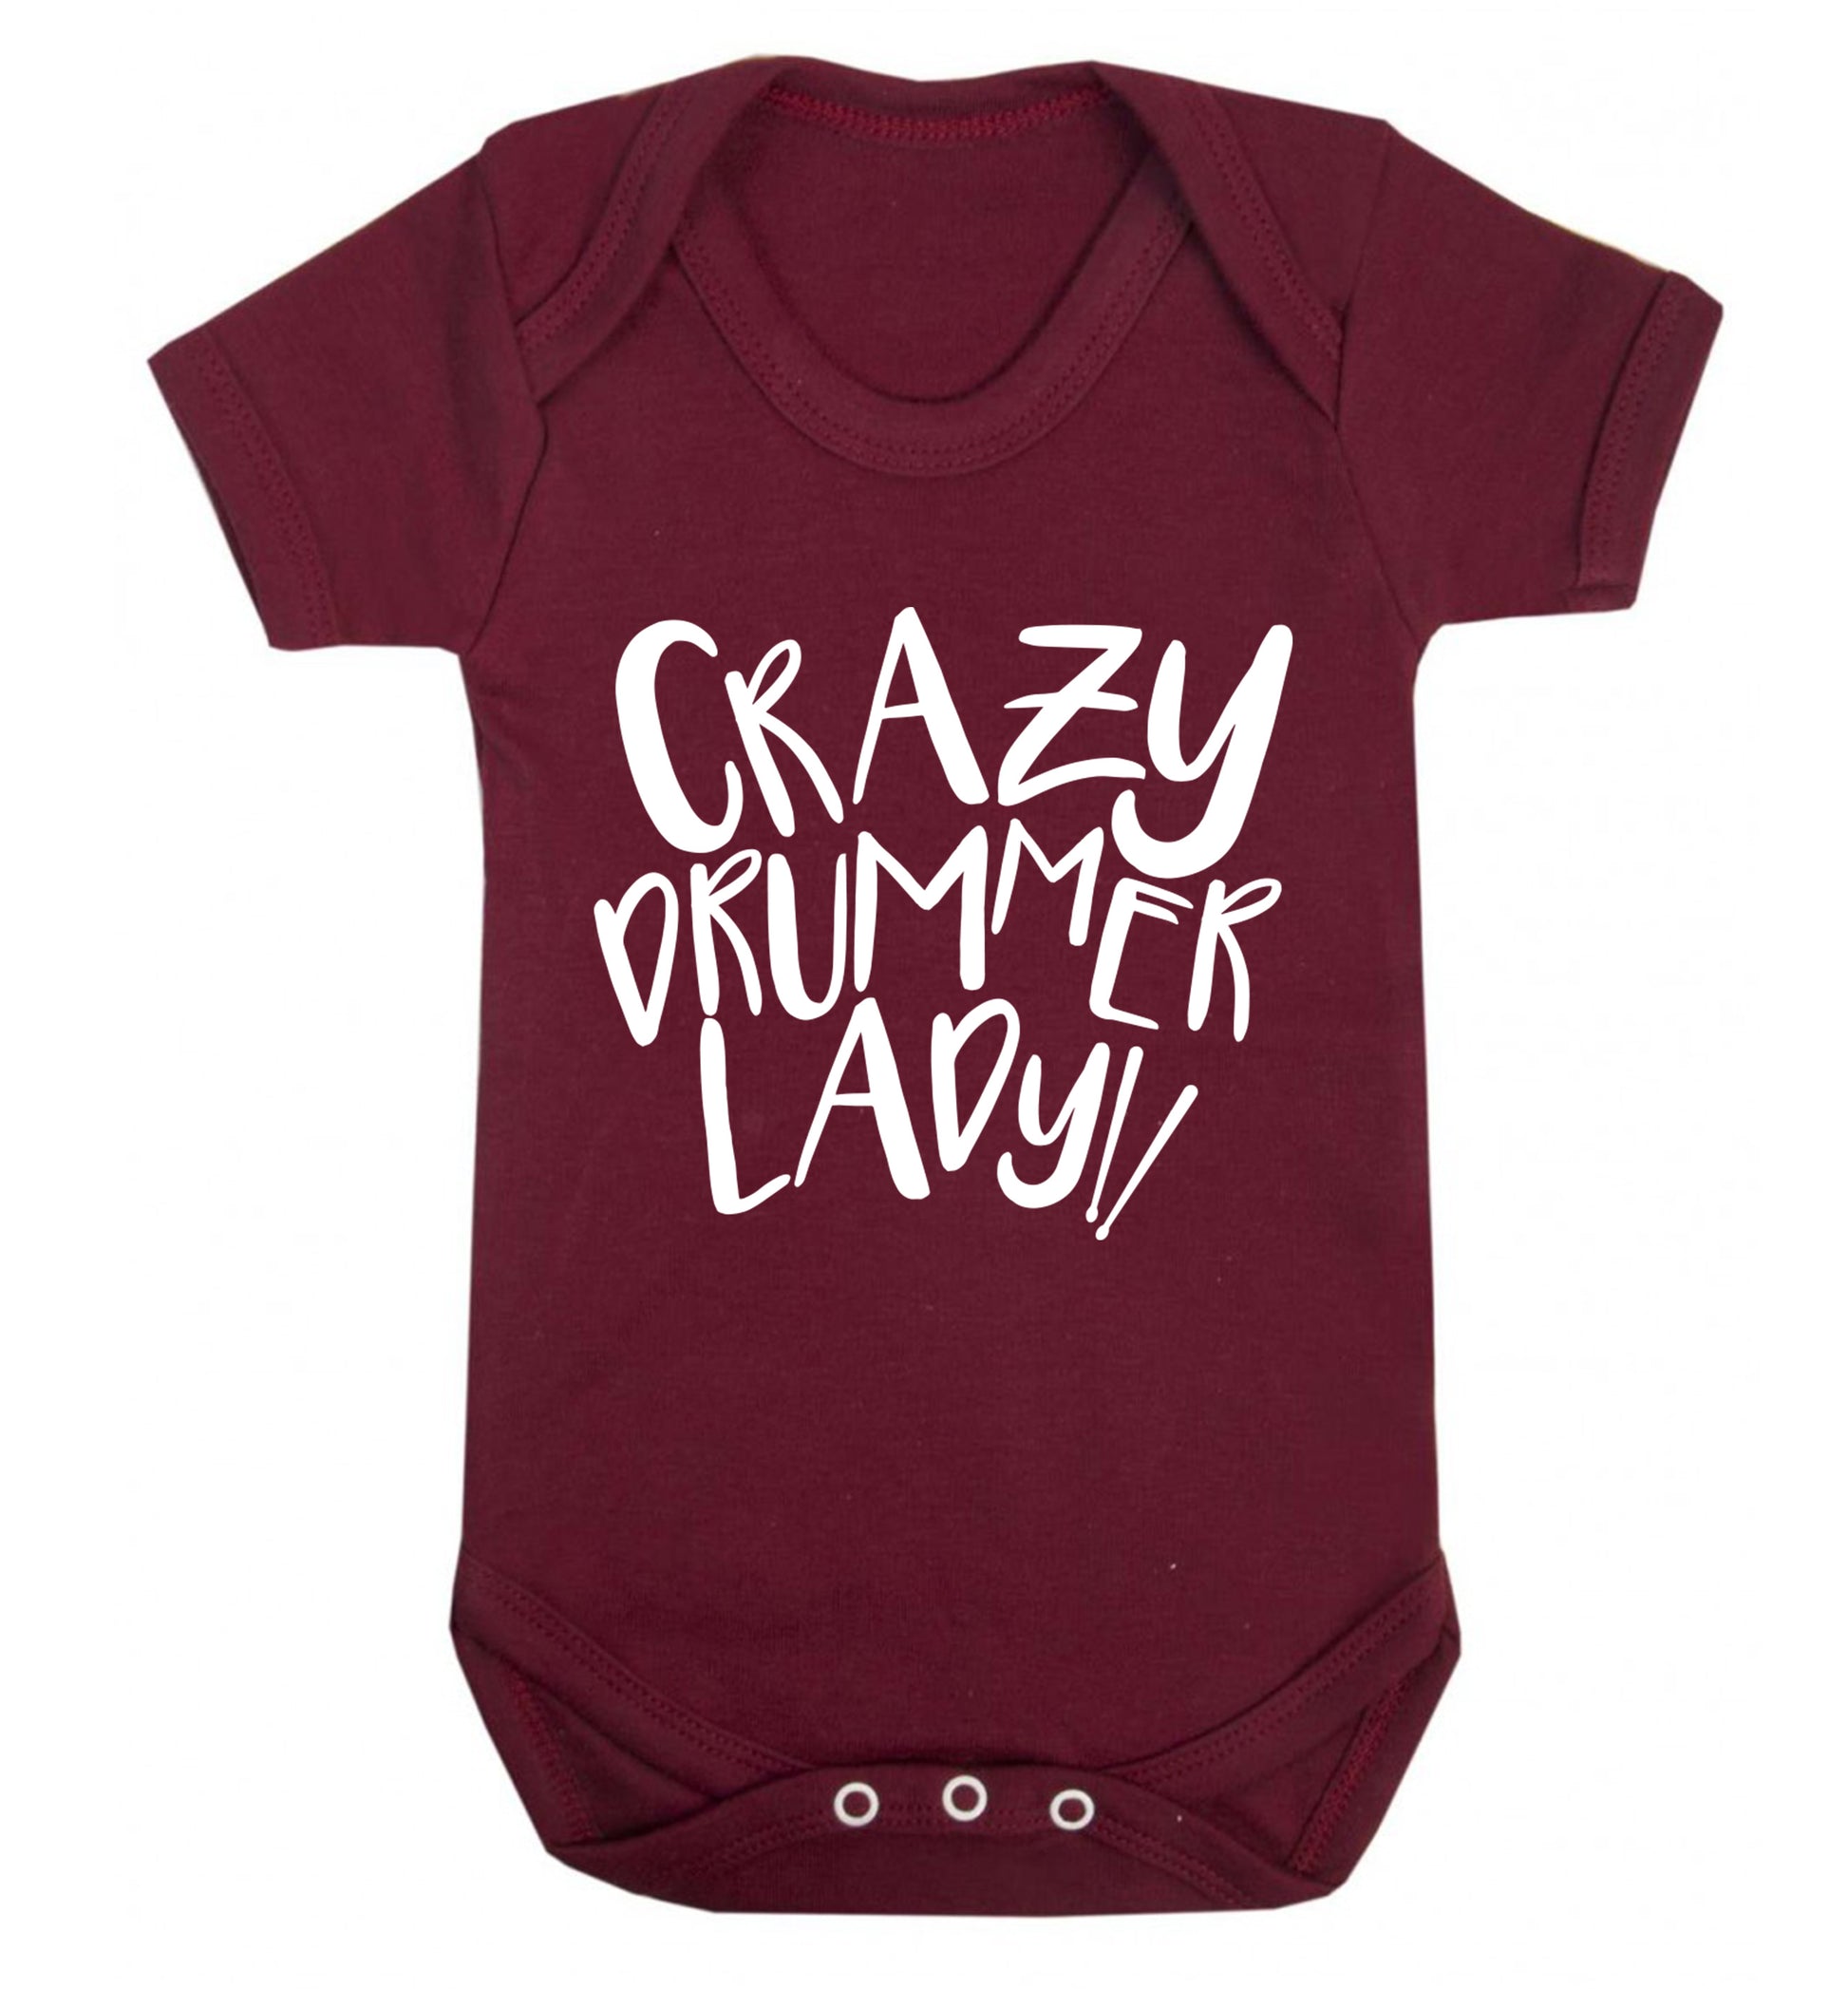 Crazy drummer lady Baby Vest maroon 18-24 months